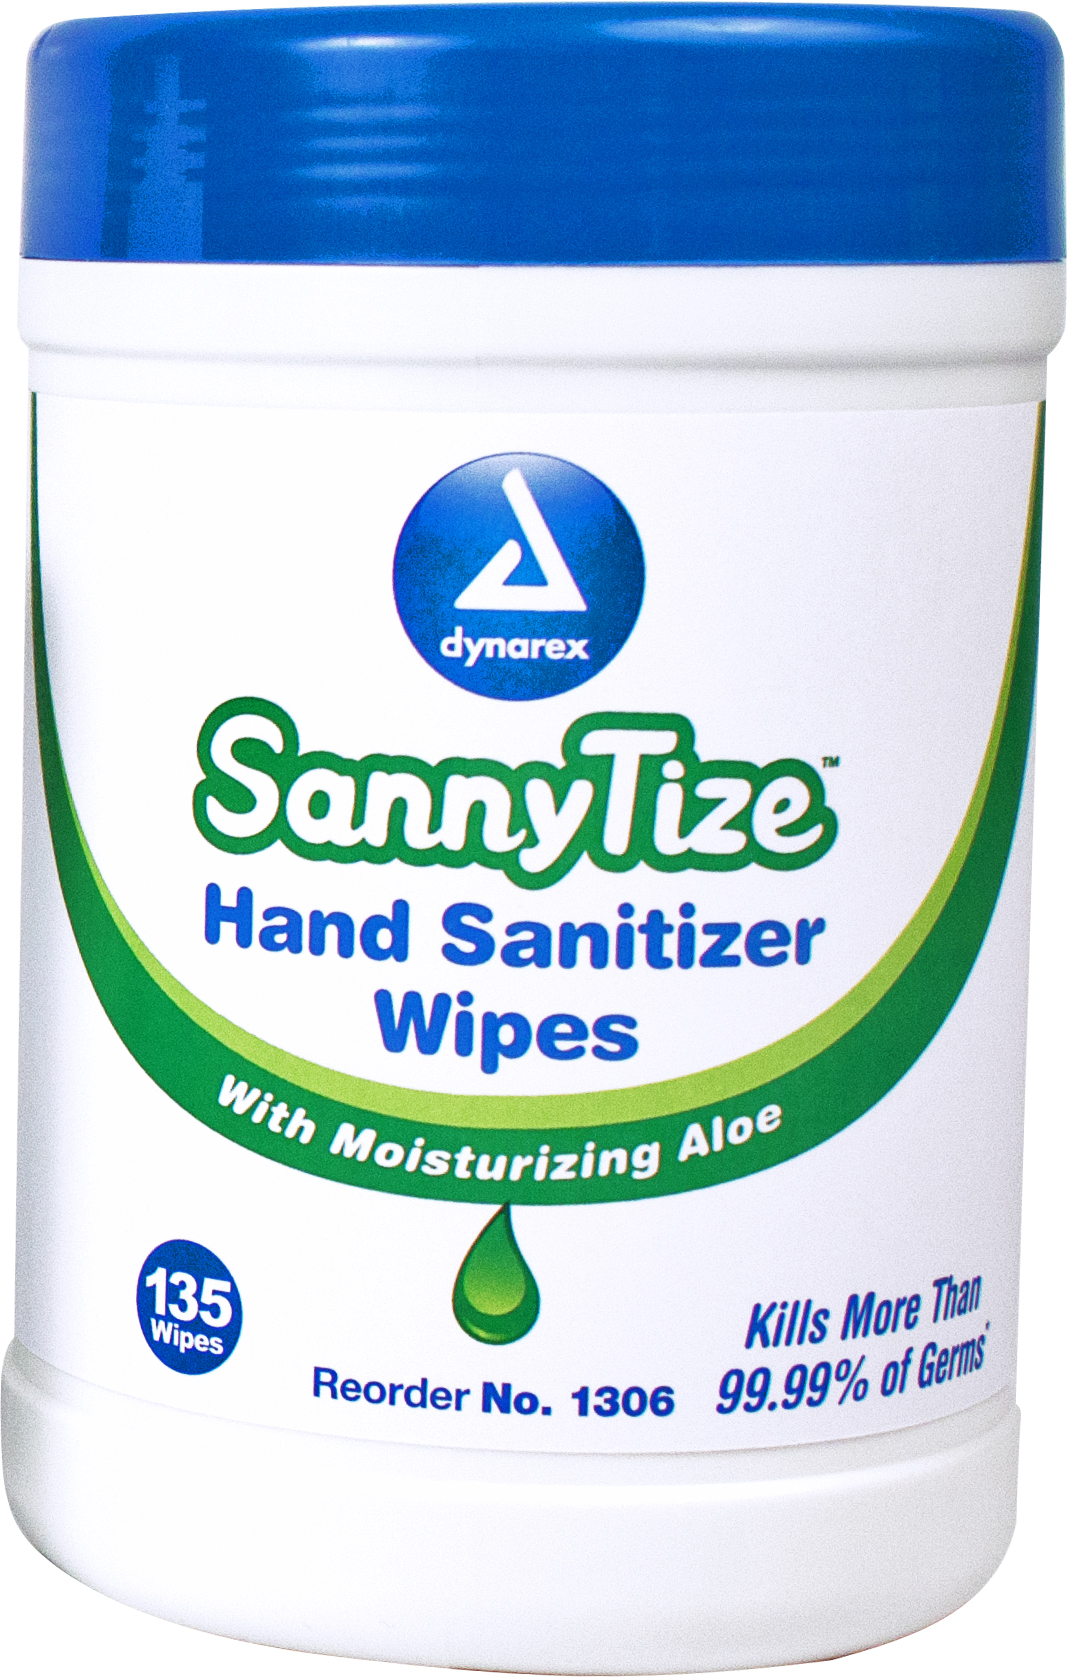 1306 Dynarex弹出罐的sanytisize即时洗手液雨刷含有70%的酒精